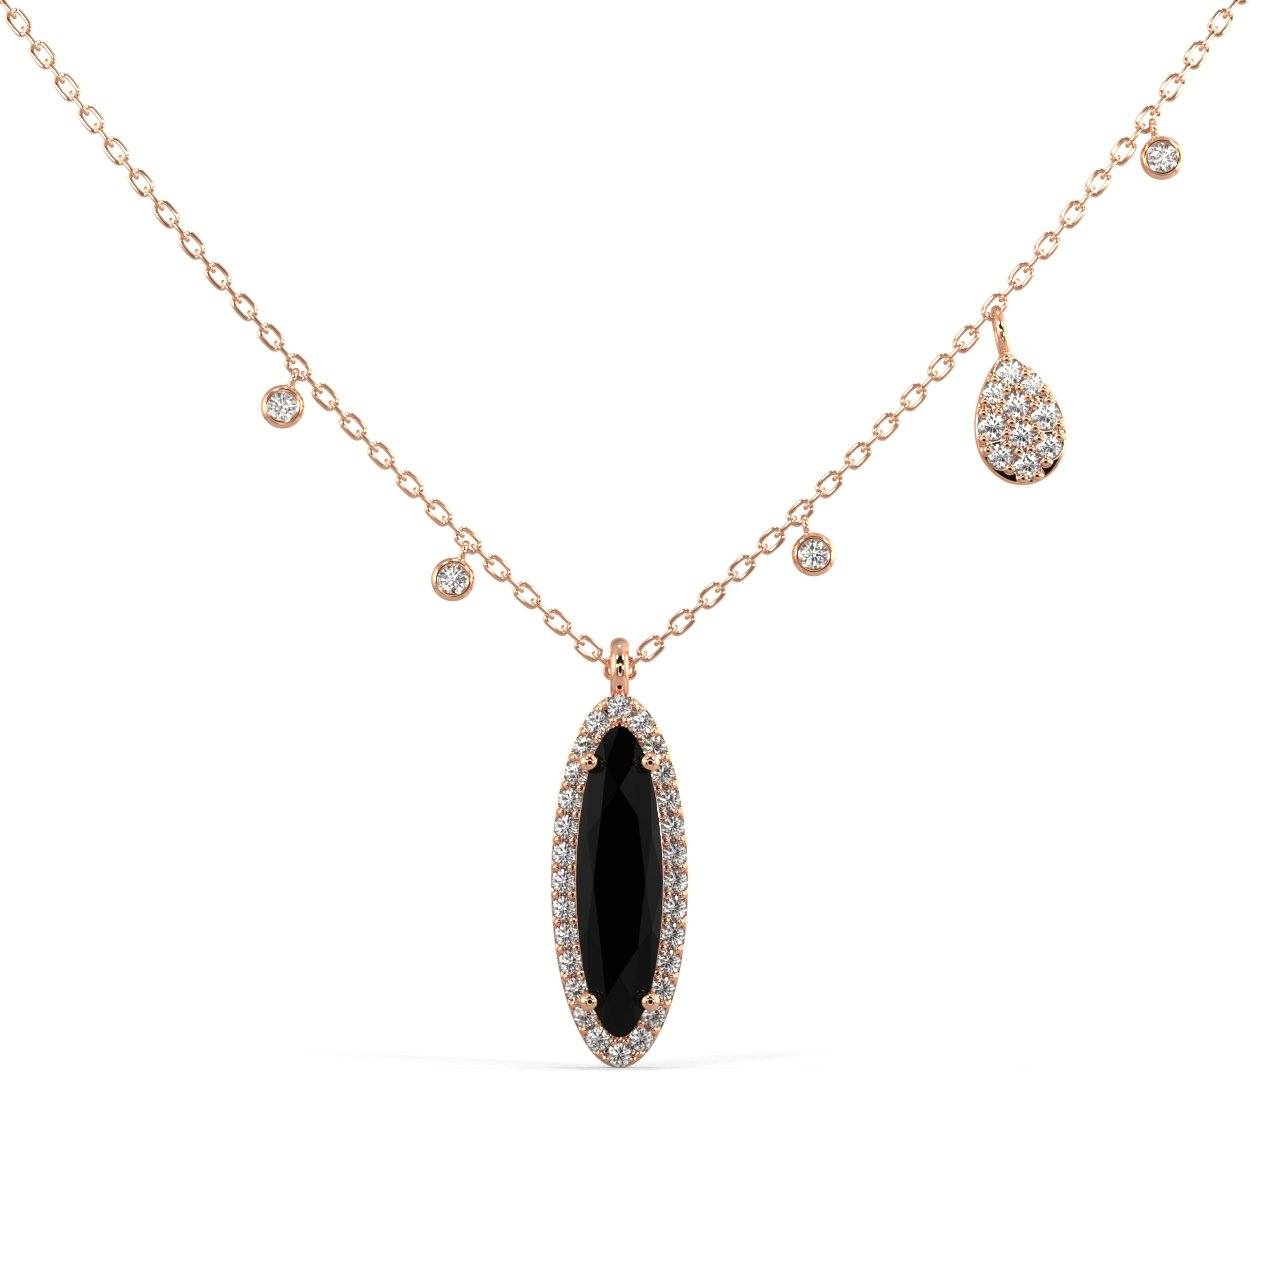 Queen Of Black Diamond Necklace Pendant Silvermist Jewelry Rose Gold 